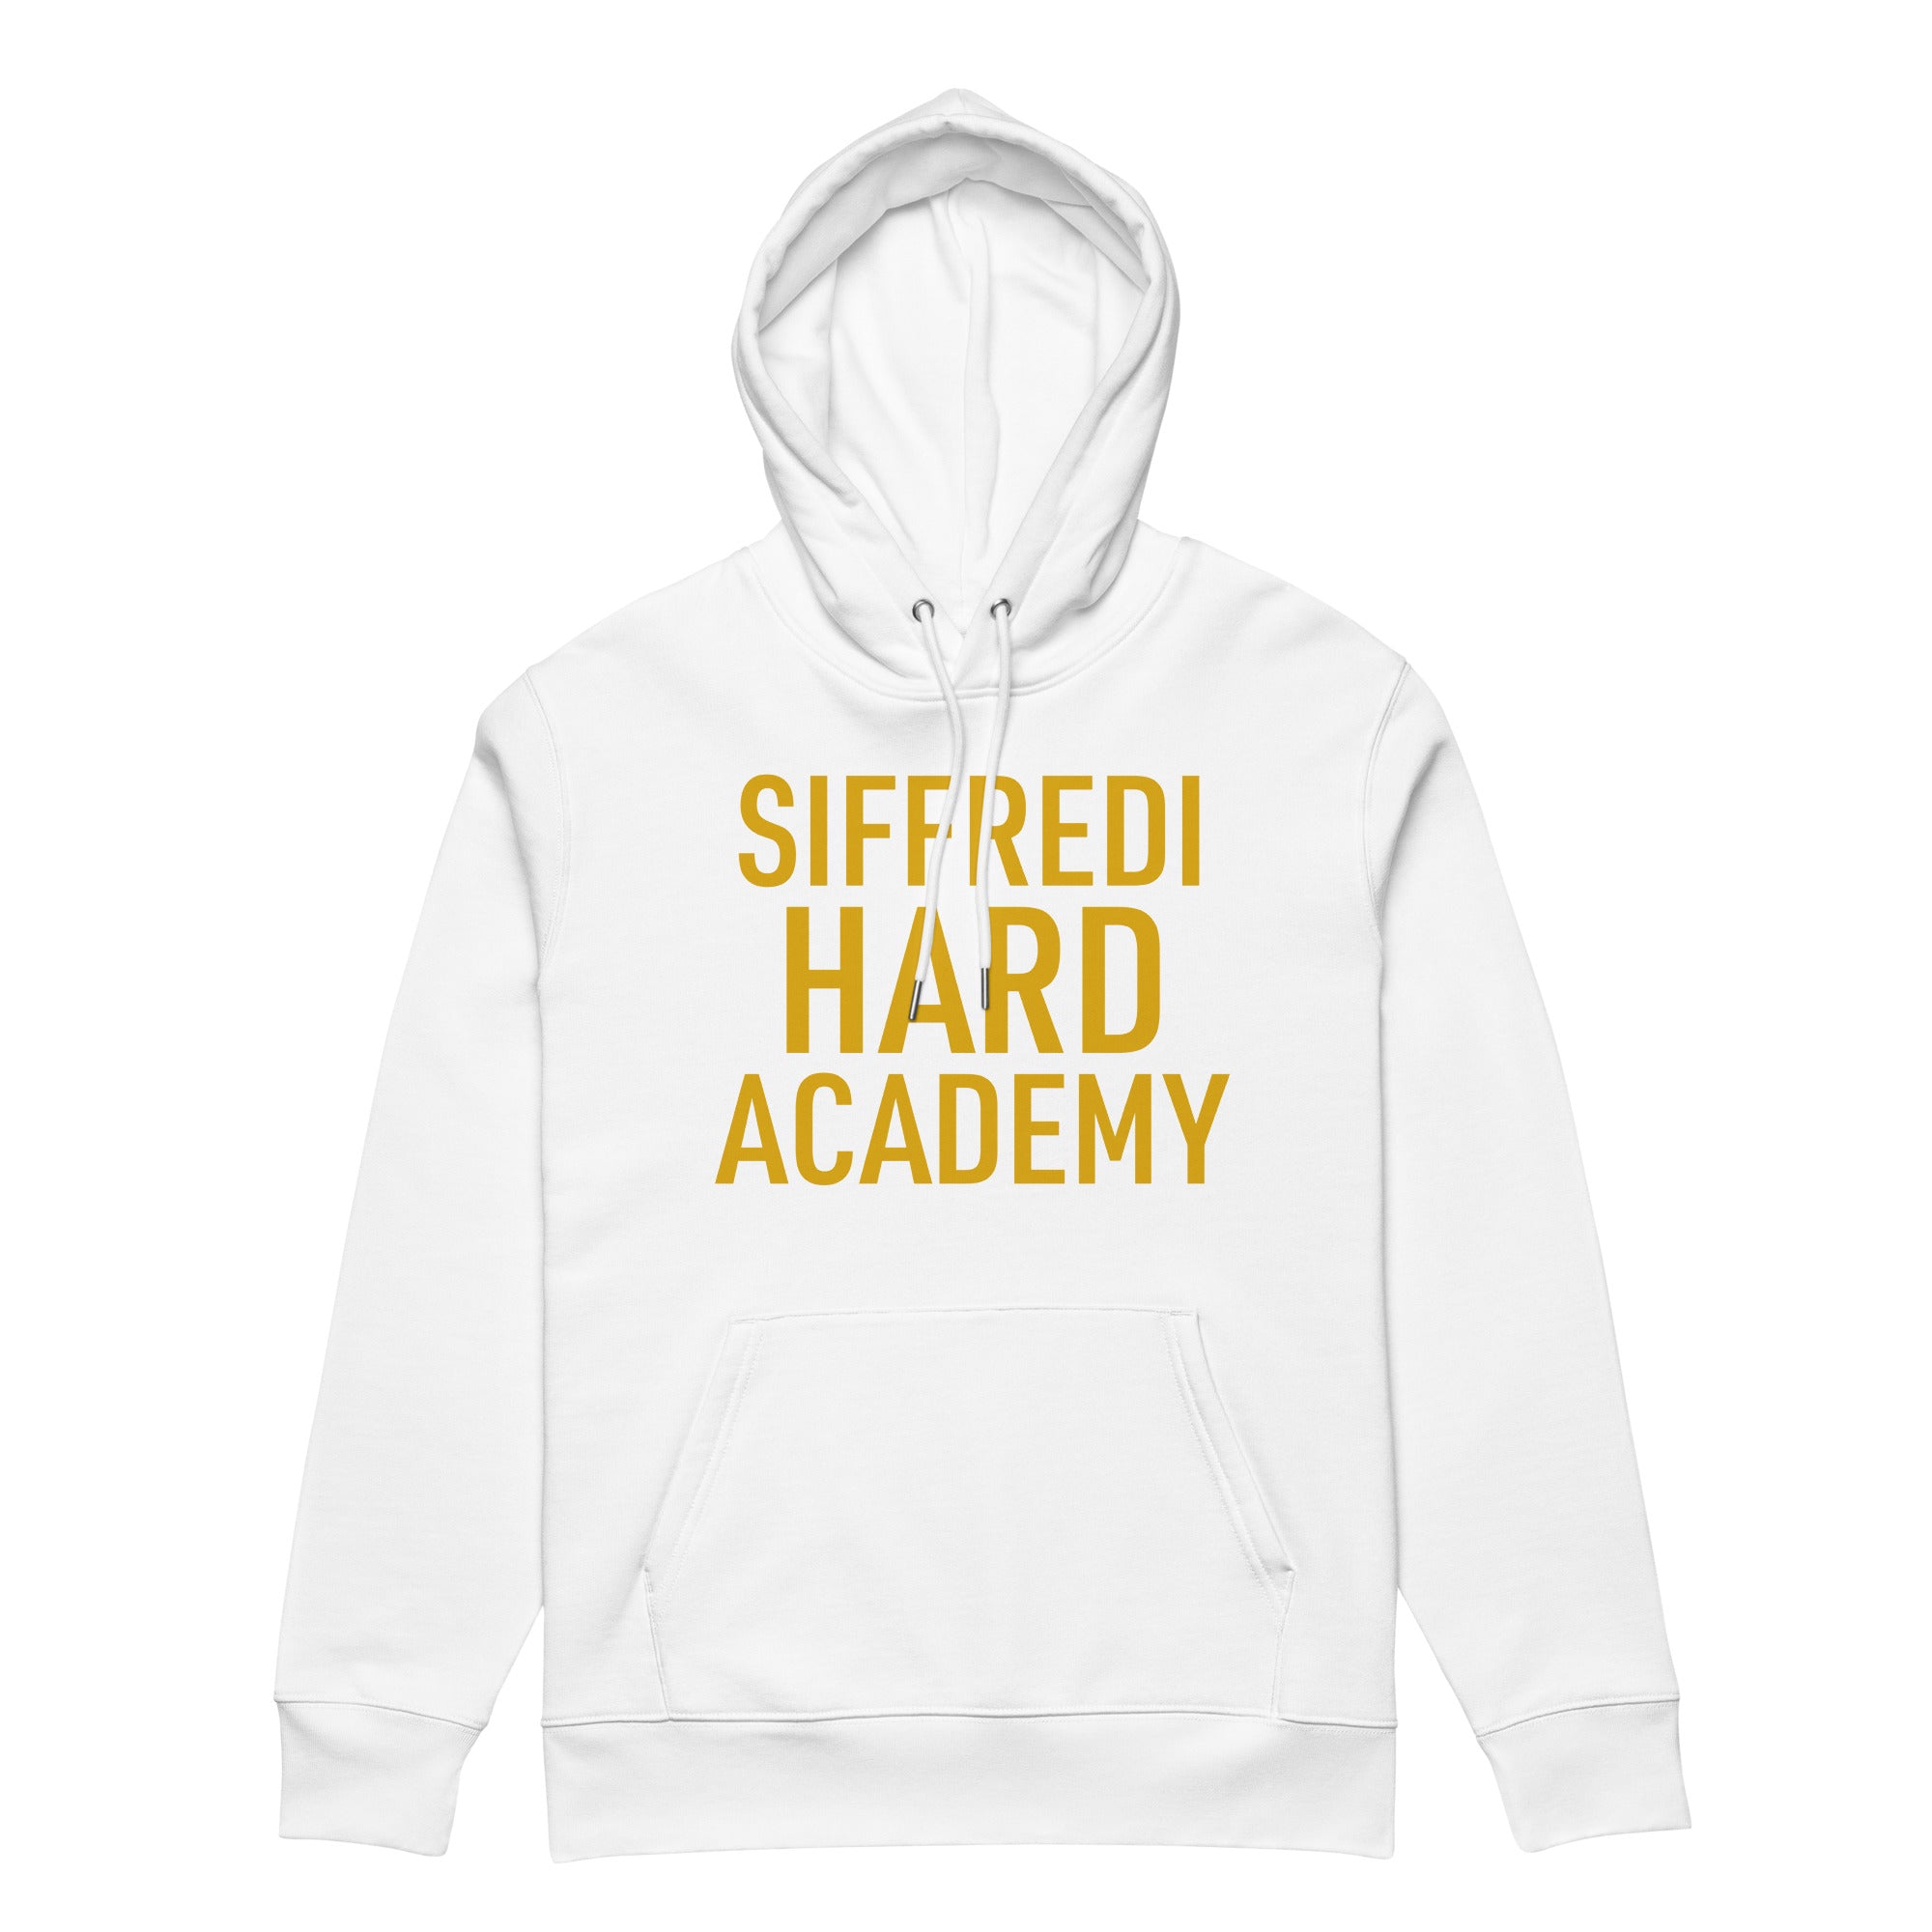 Siffredi Hard Academy Hoodie - White